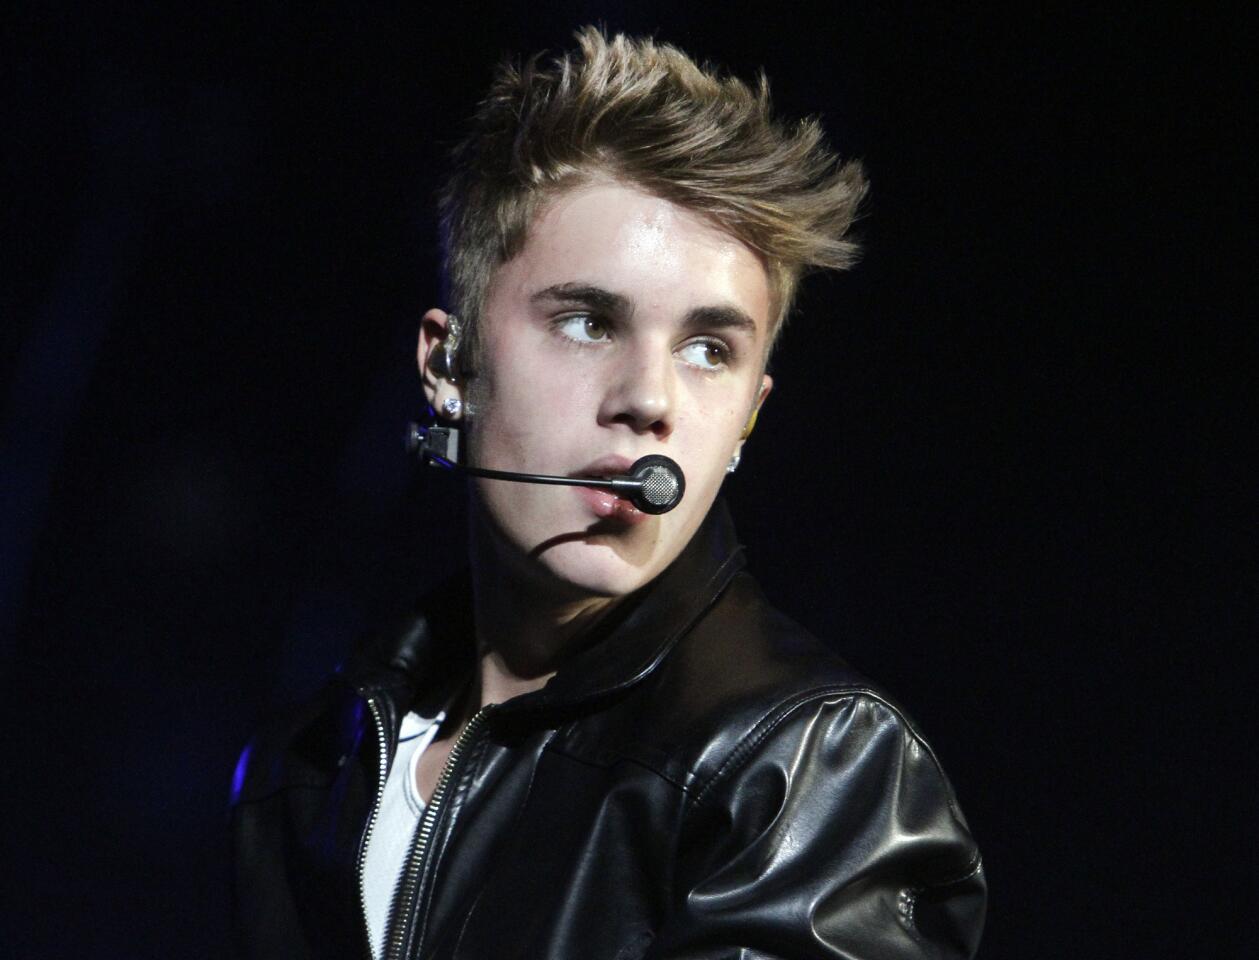 Plot to murder Justin Bieber foiled